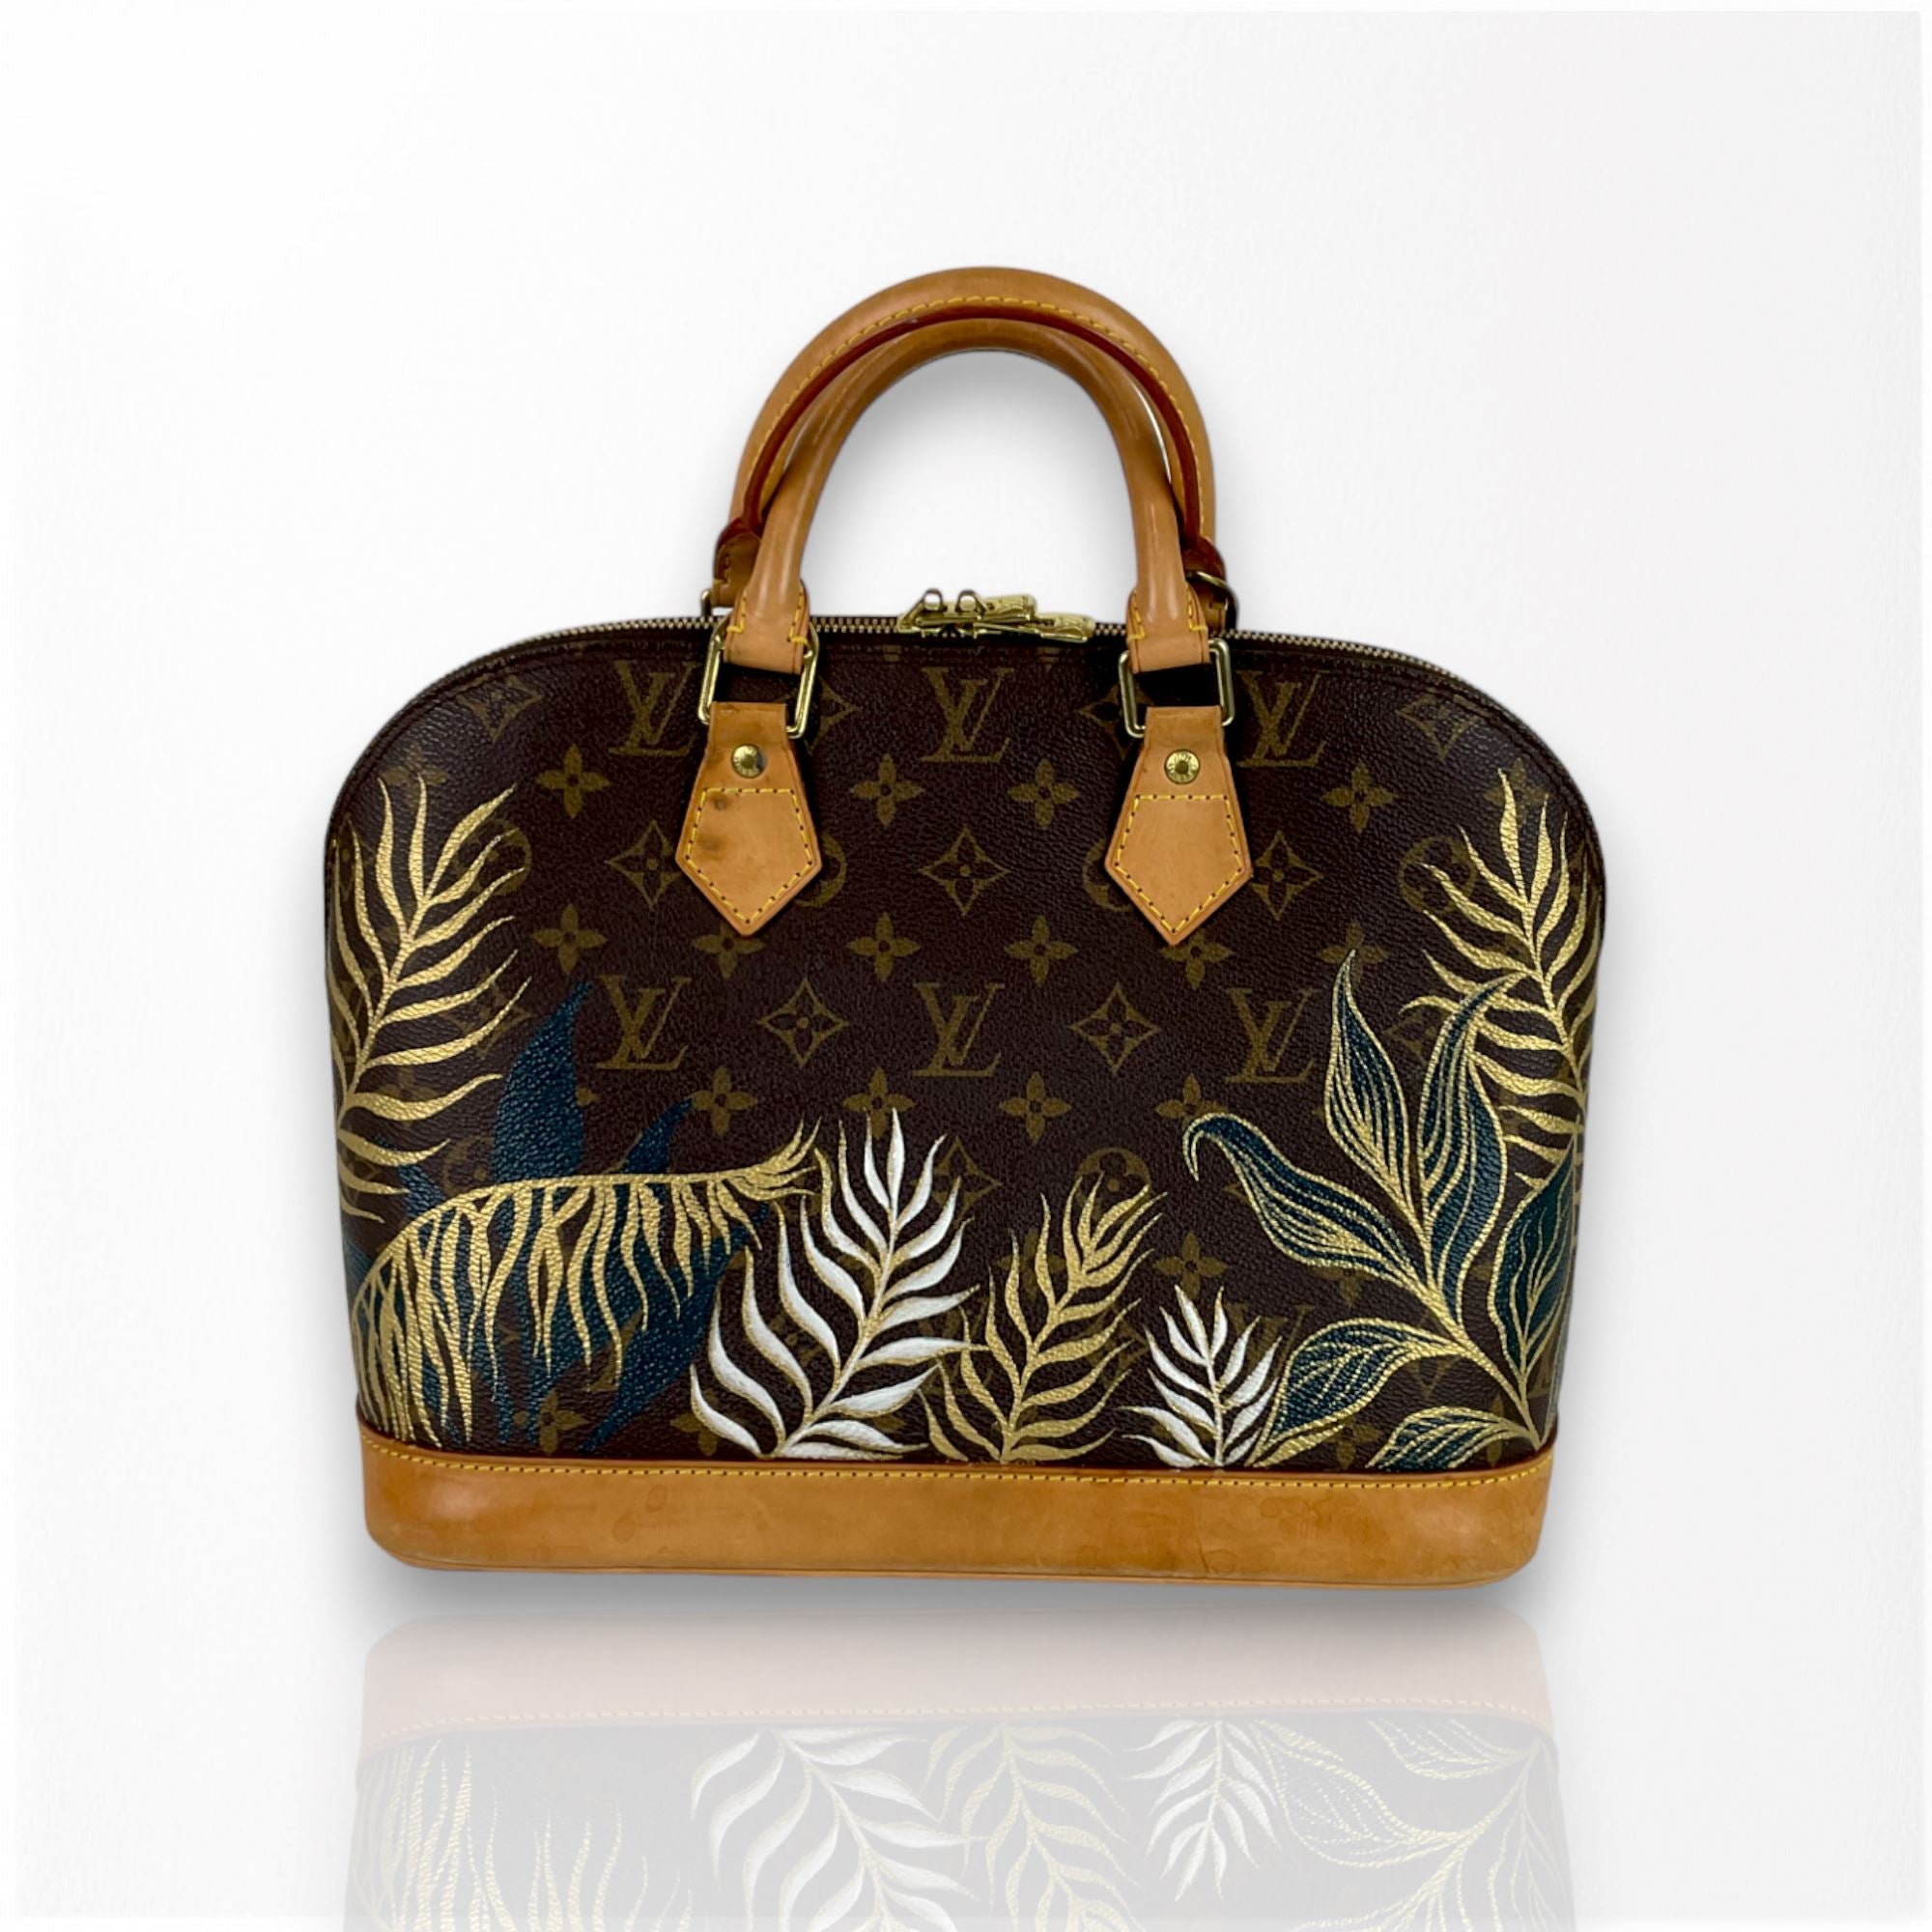 Louis Vuitton Alma: A Quintessential Piece Of Handbag History